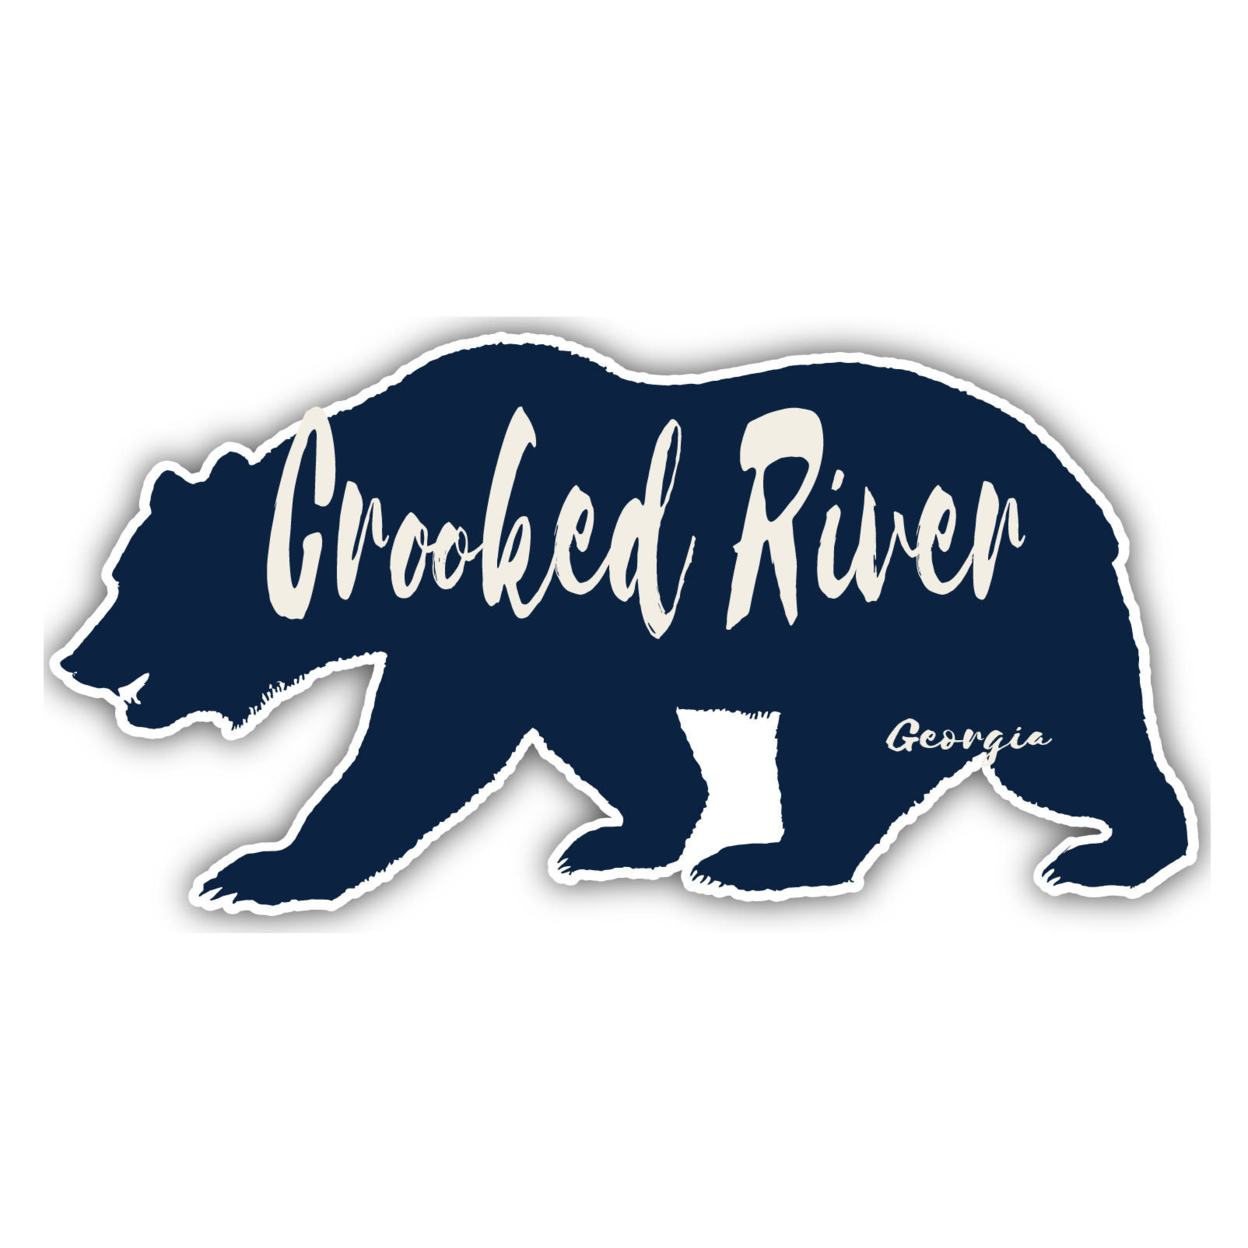 Crooked River Georgia Souvenir Decorative Stickers (Choose Theme And Size) - Single Unit, 4-Inch, Bear